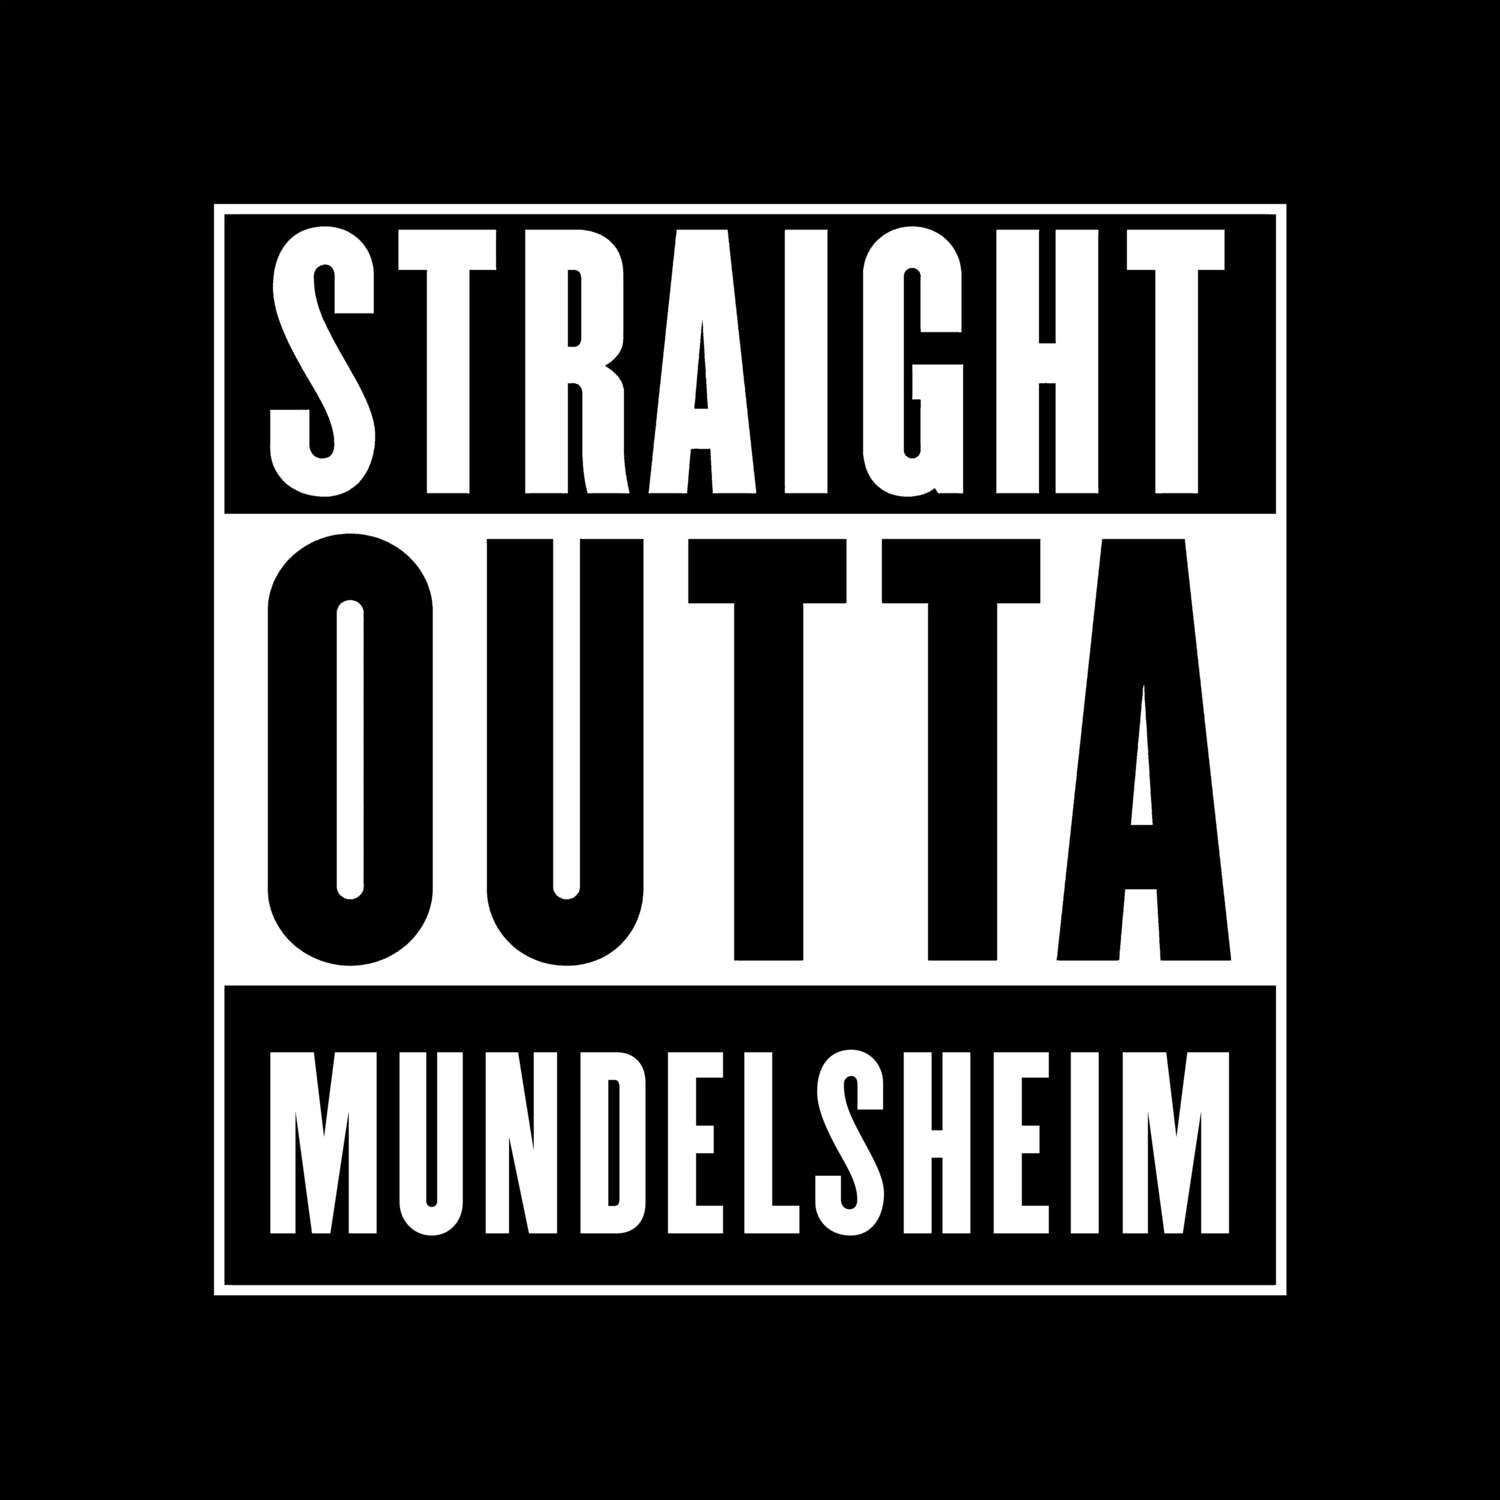 Mundelsheim T-Shirt »Straight Outta«